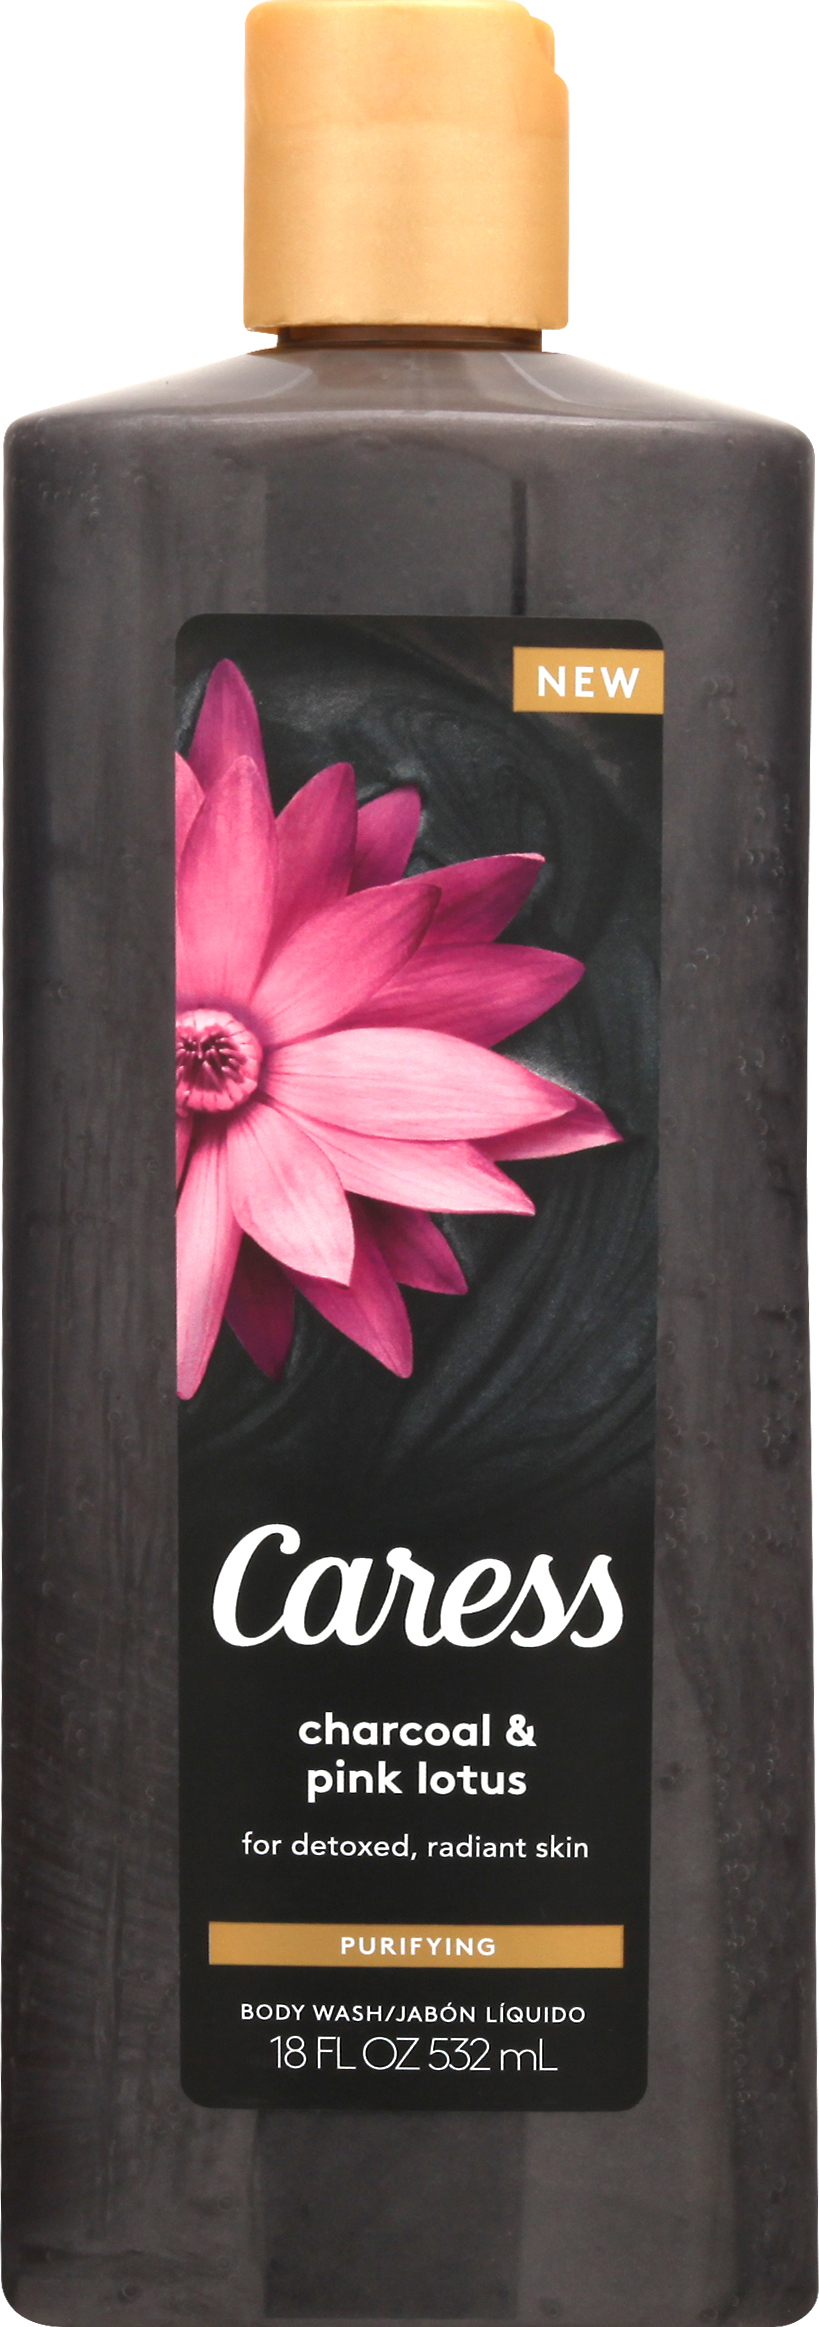 Caress Charcoal & Pink Lotus Body Wash 18 oz